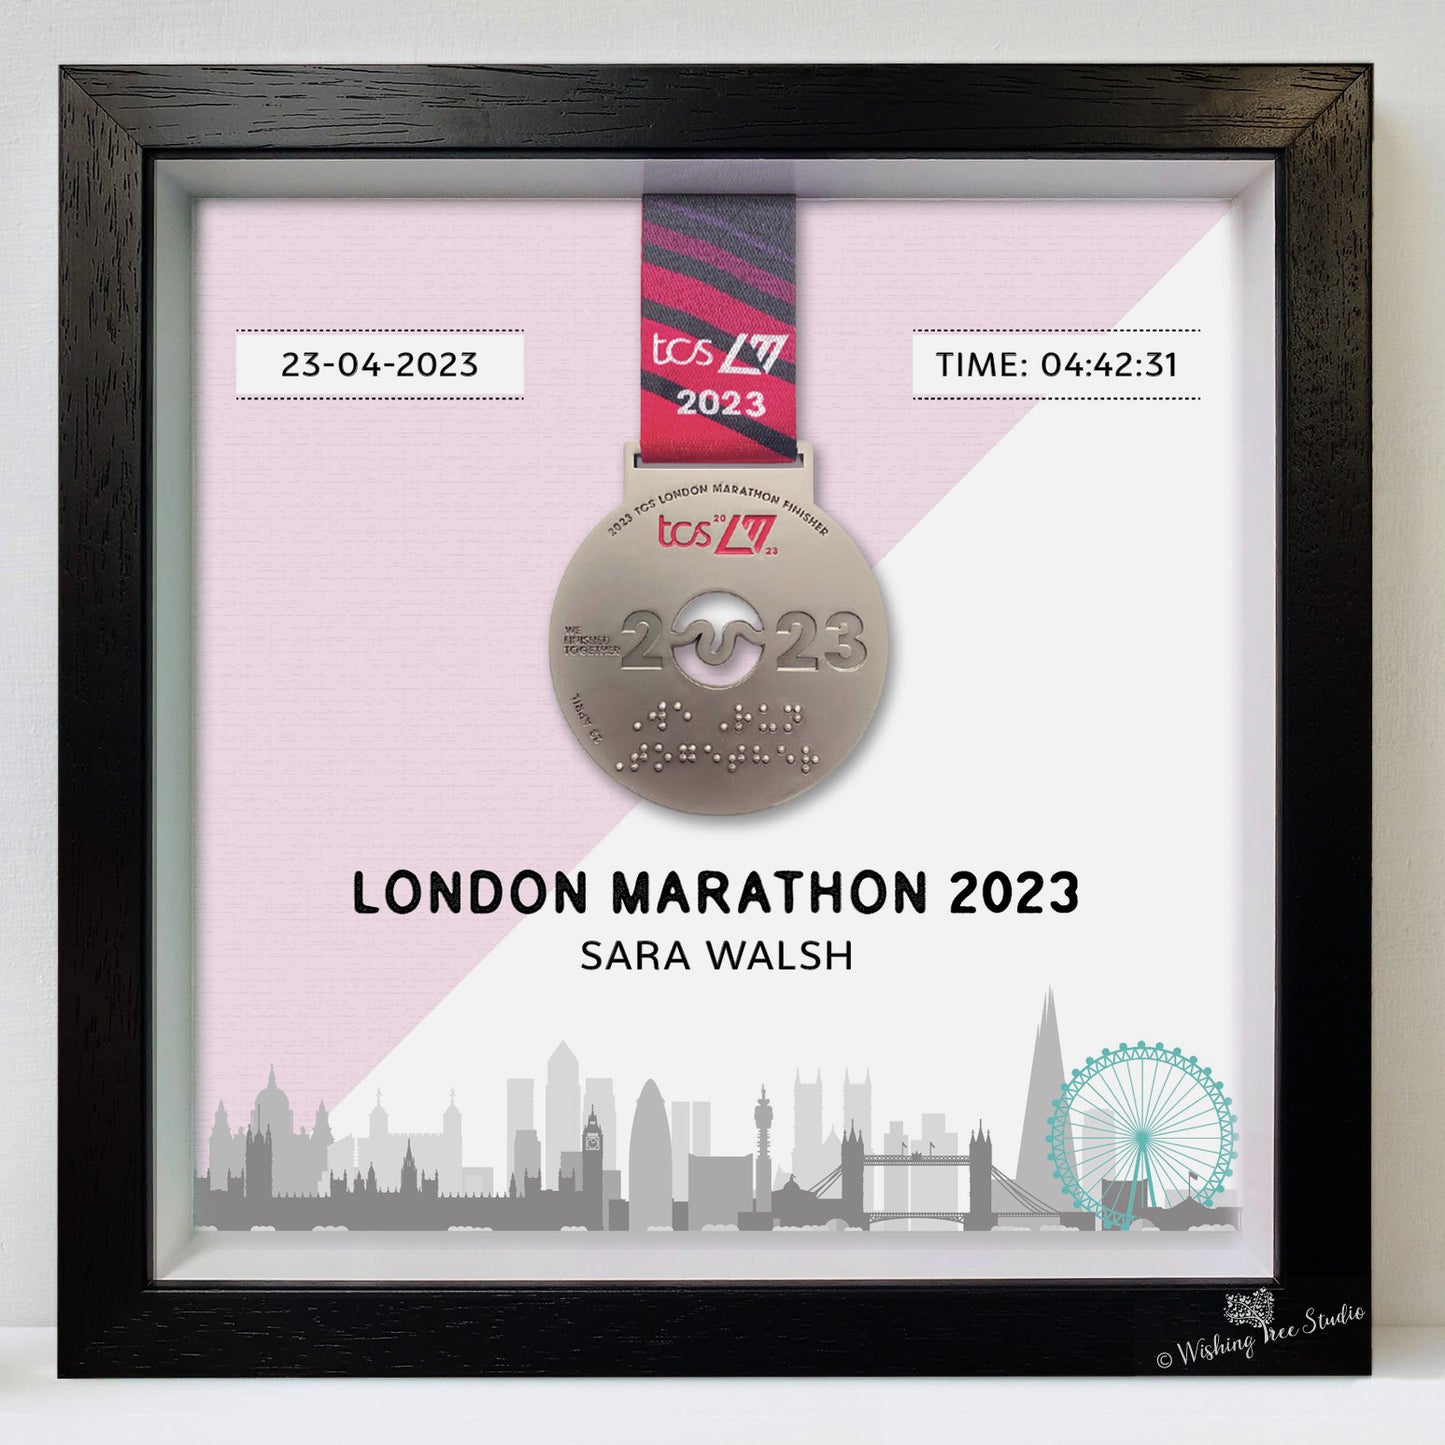 London Marathon medal display frame